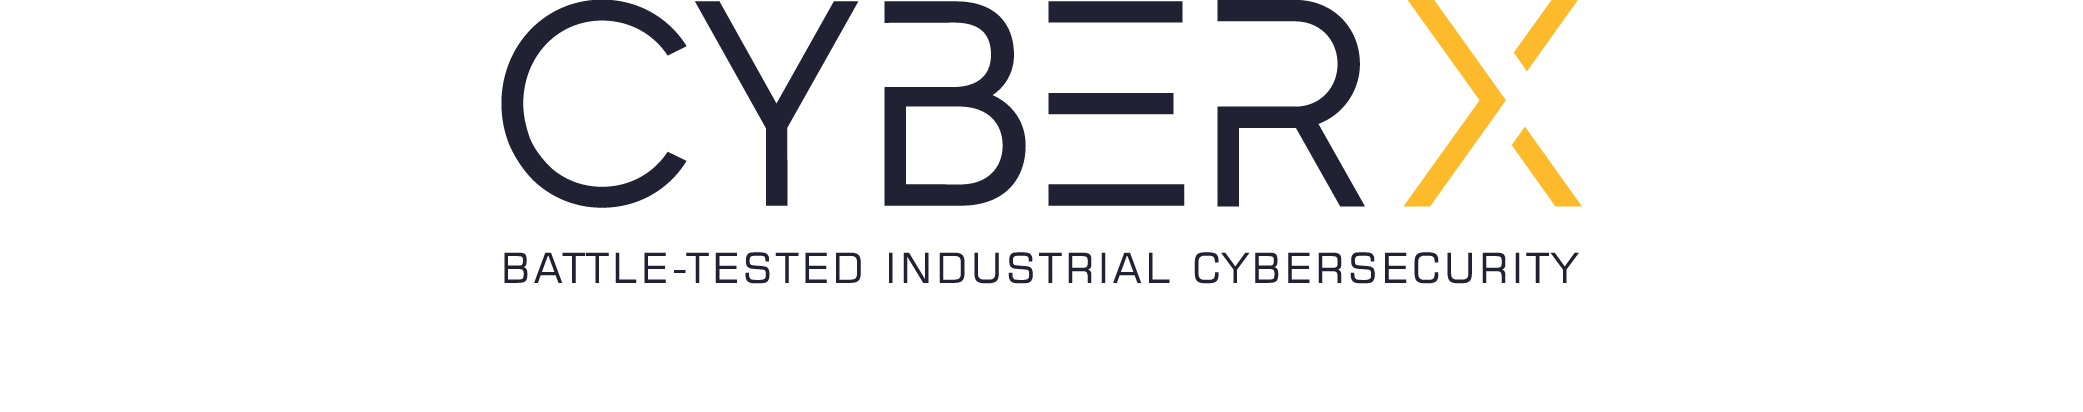 Microsoft acquires CyberX to enhance Azure IoT security - OnMSFT.com - June 23, 2020